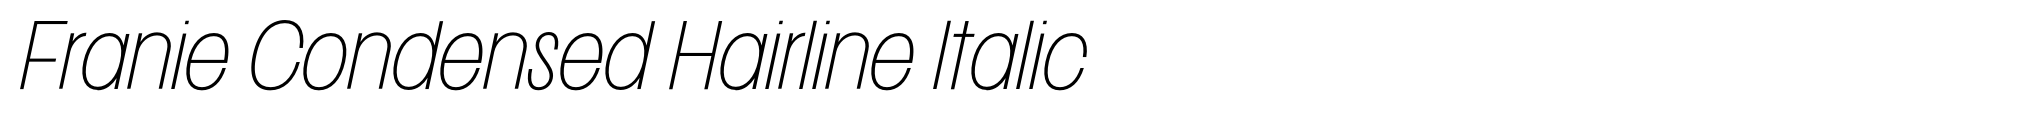 Franie Condensed Hairline Italic image